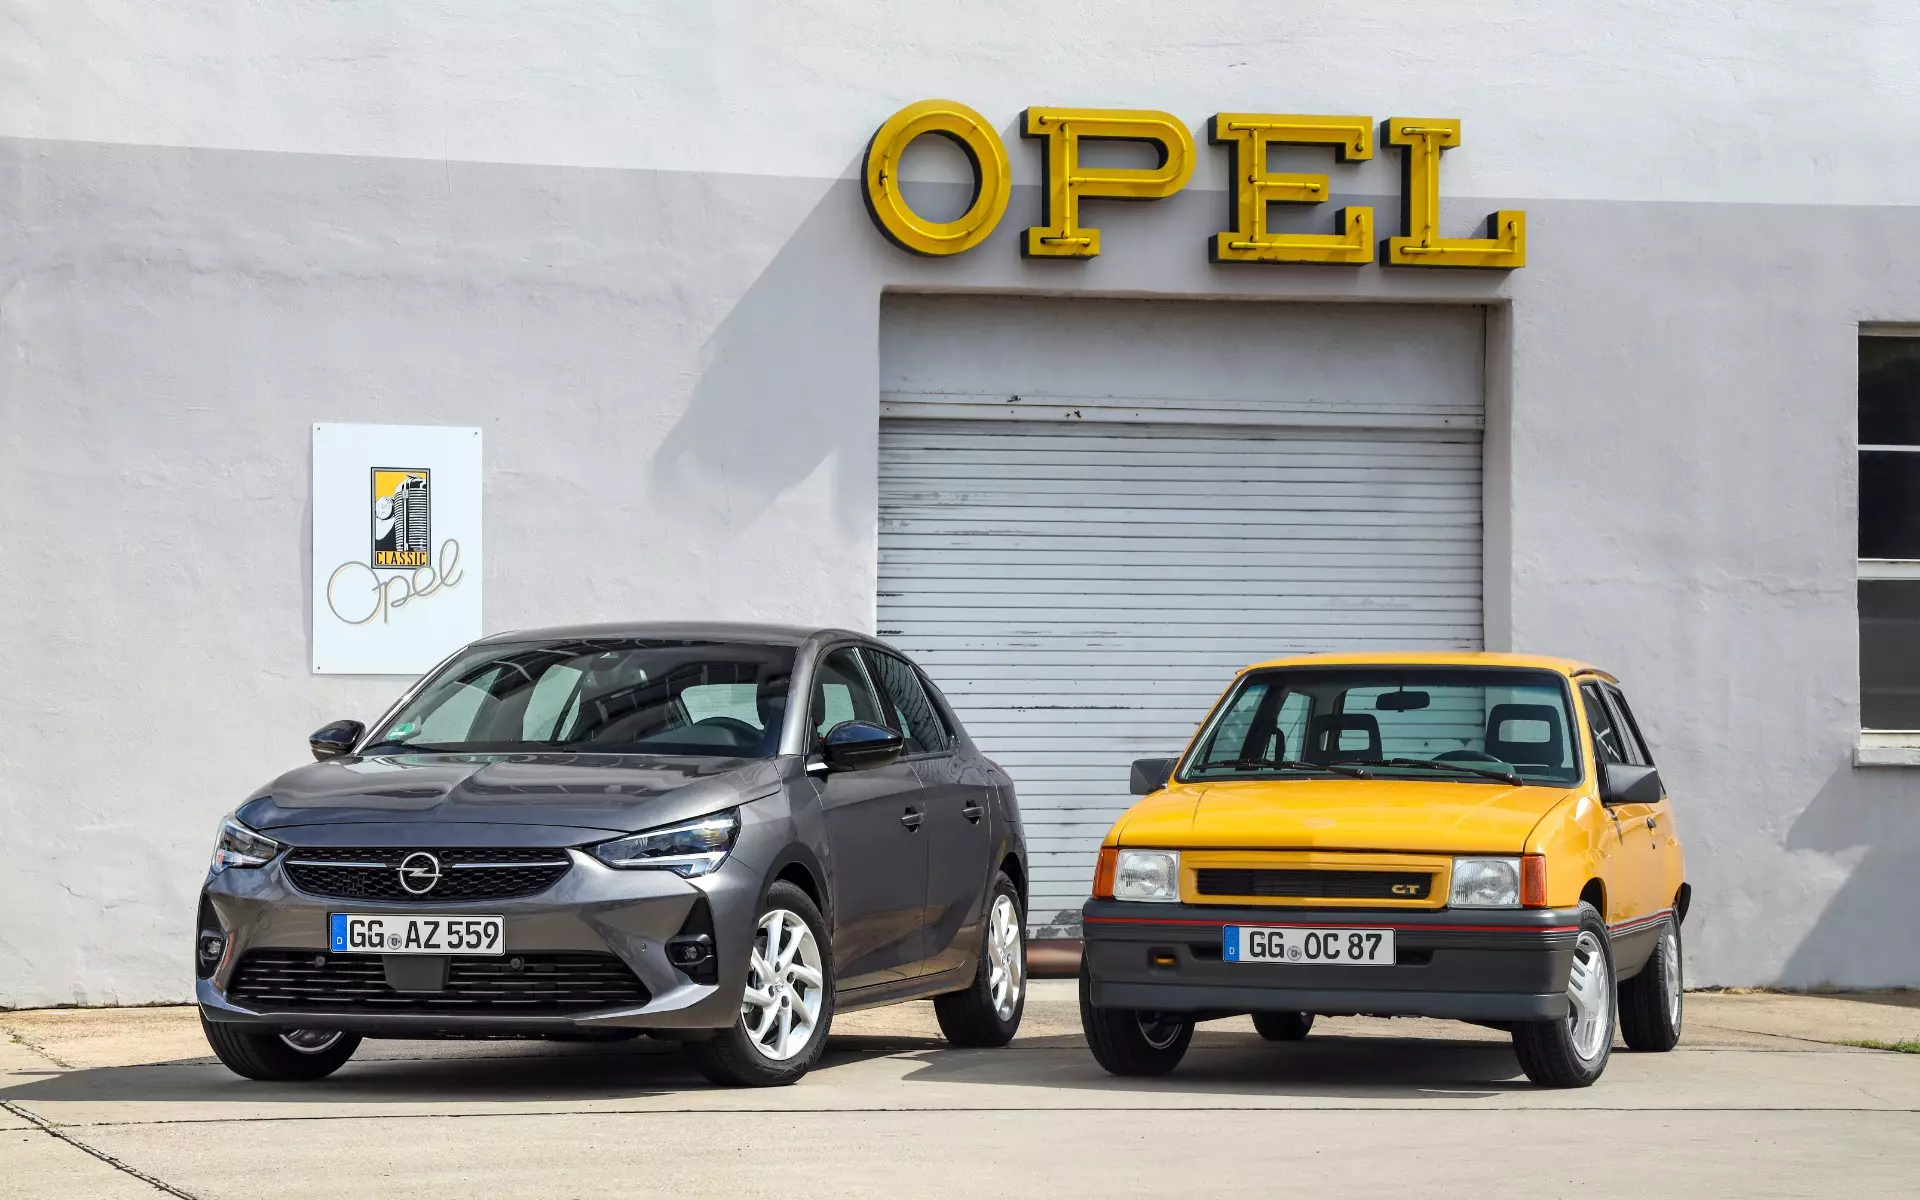 Sese '87 Opel Corsa GT maua i Porto 7332_7